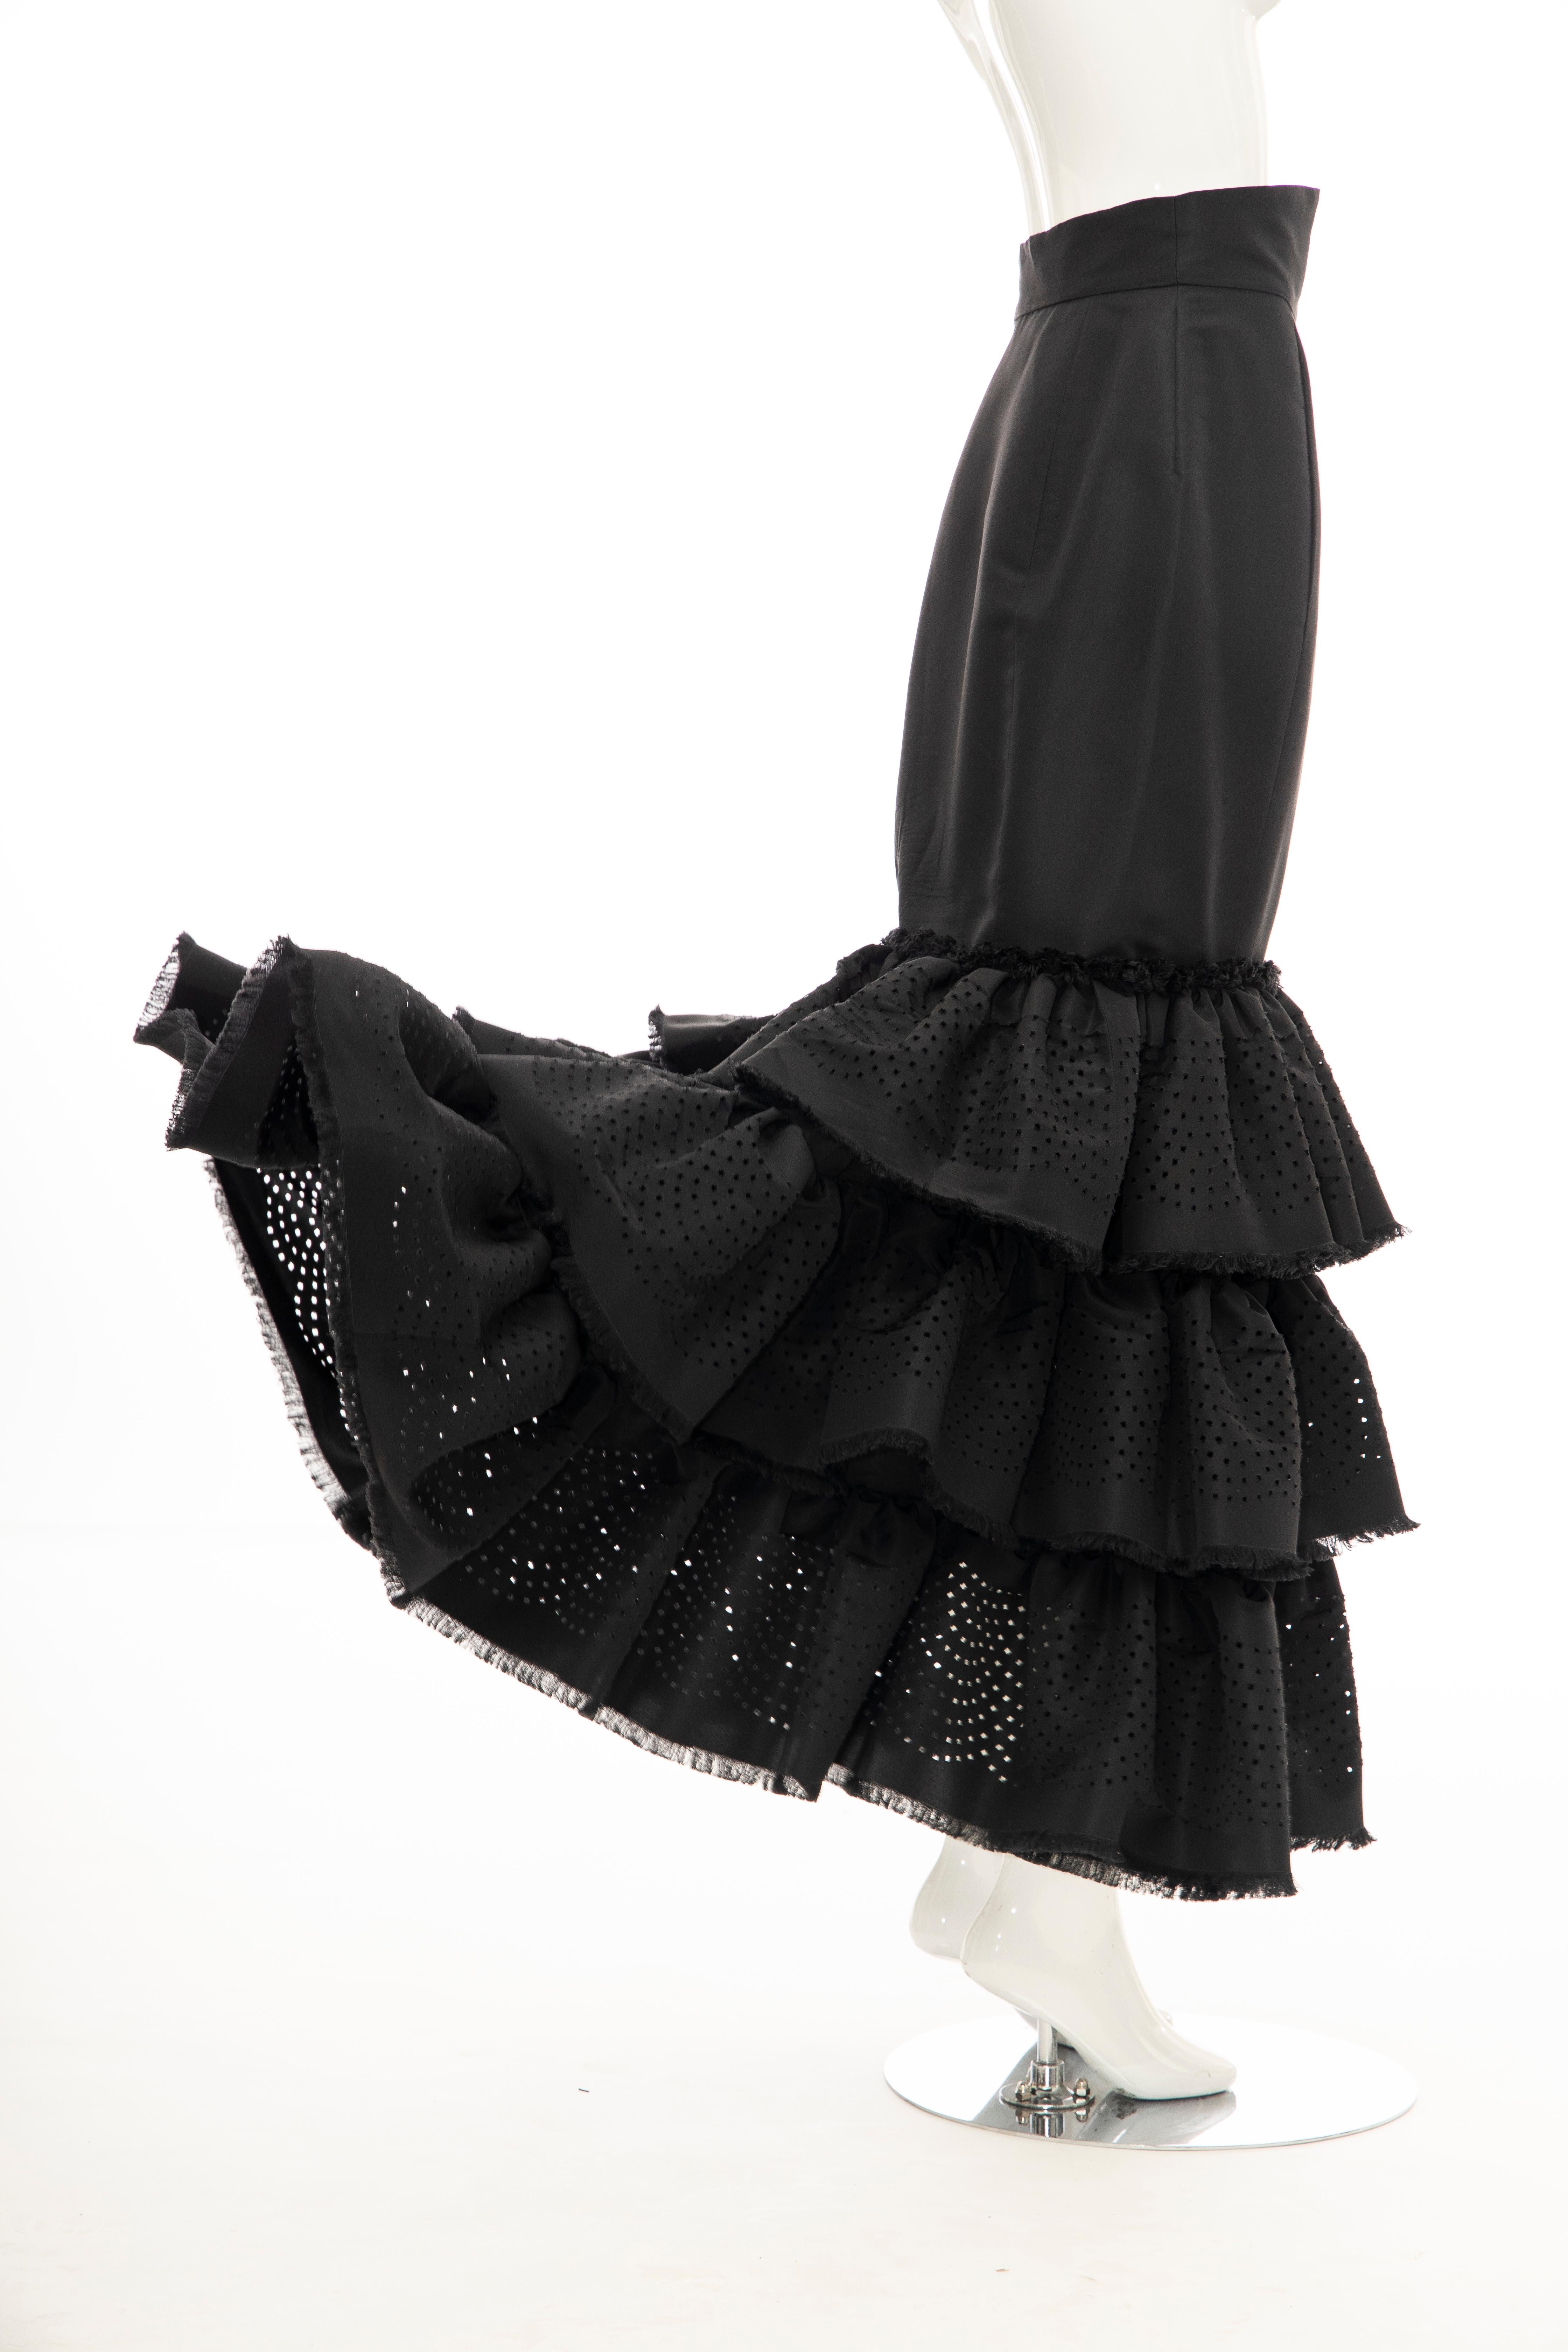 Oscar de la Renta Black Punched Silk Faille Evening Skirt, Fall 2001 For Sale 5